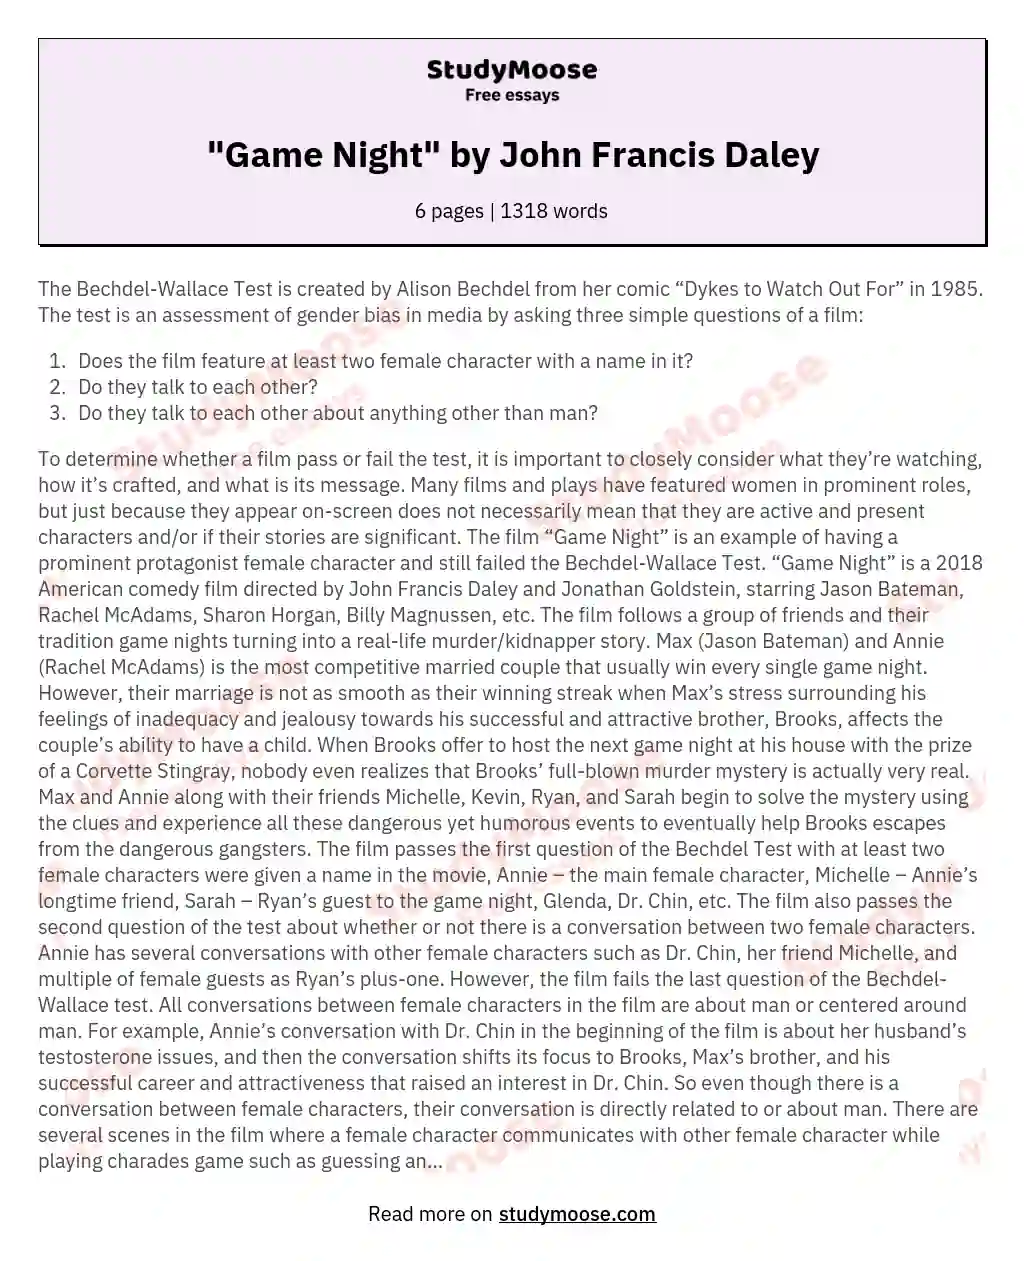 "Game Night" by John Francis Daley essay